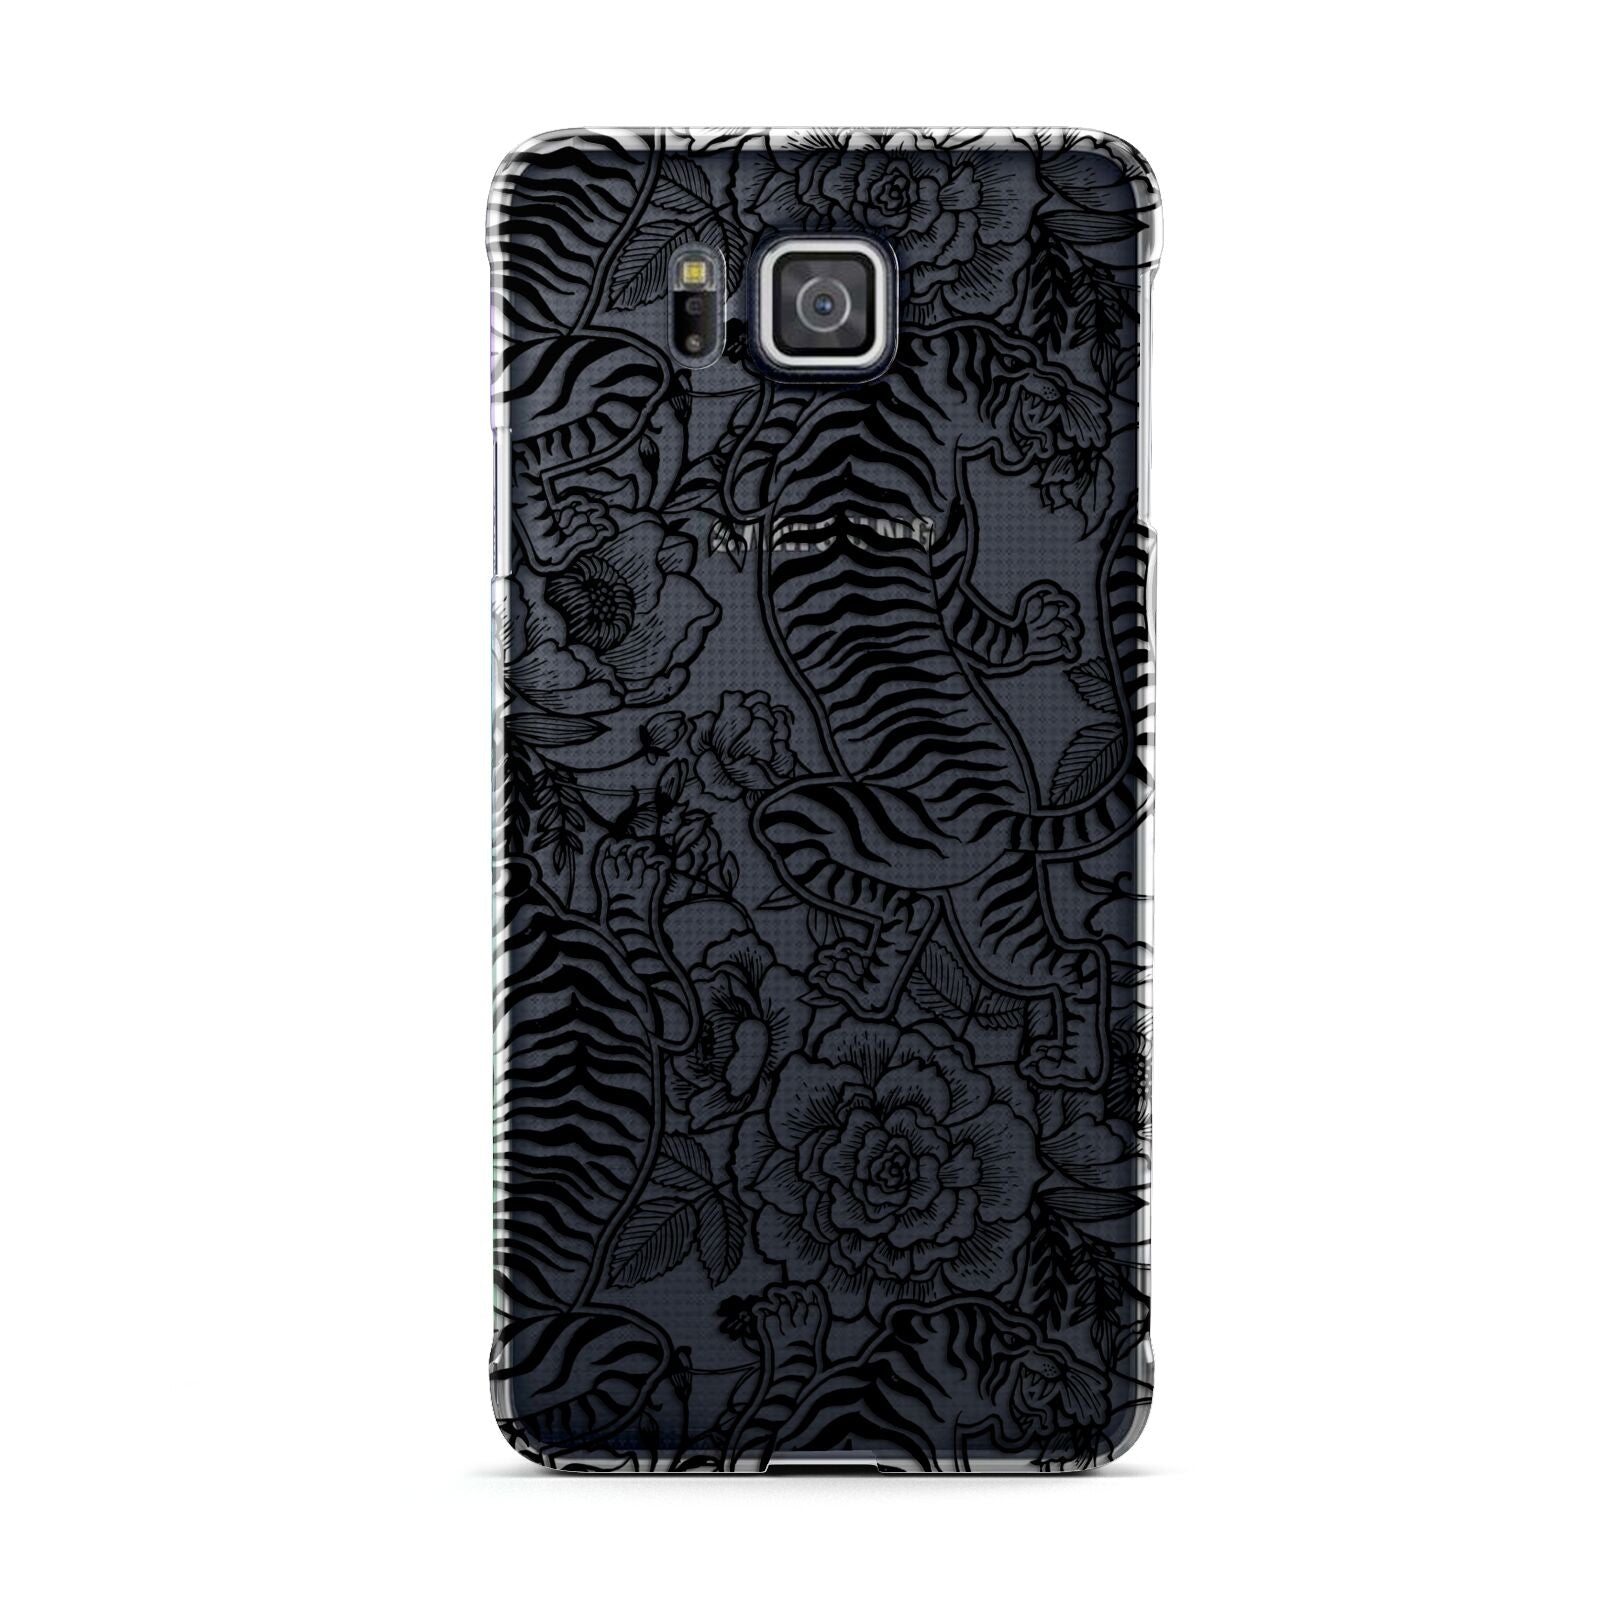 Chinese Tiger Samsung Galaxy Alpha Case